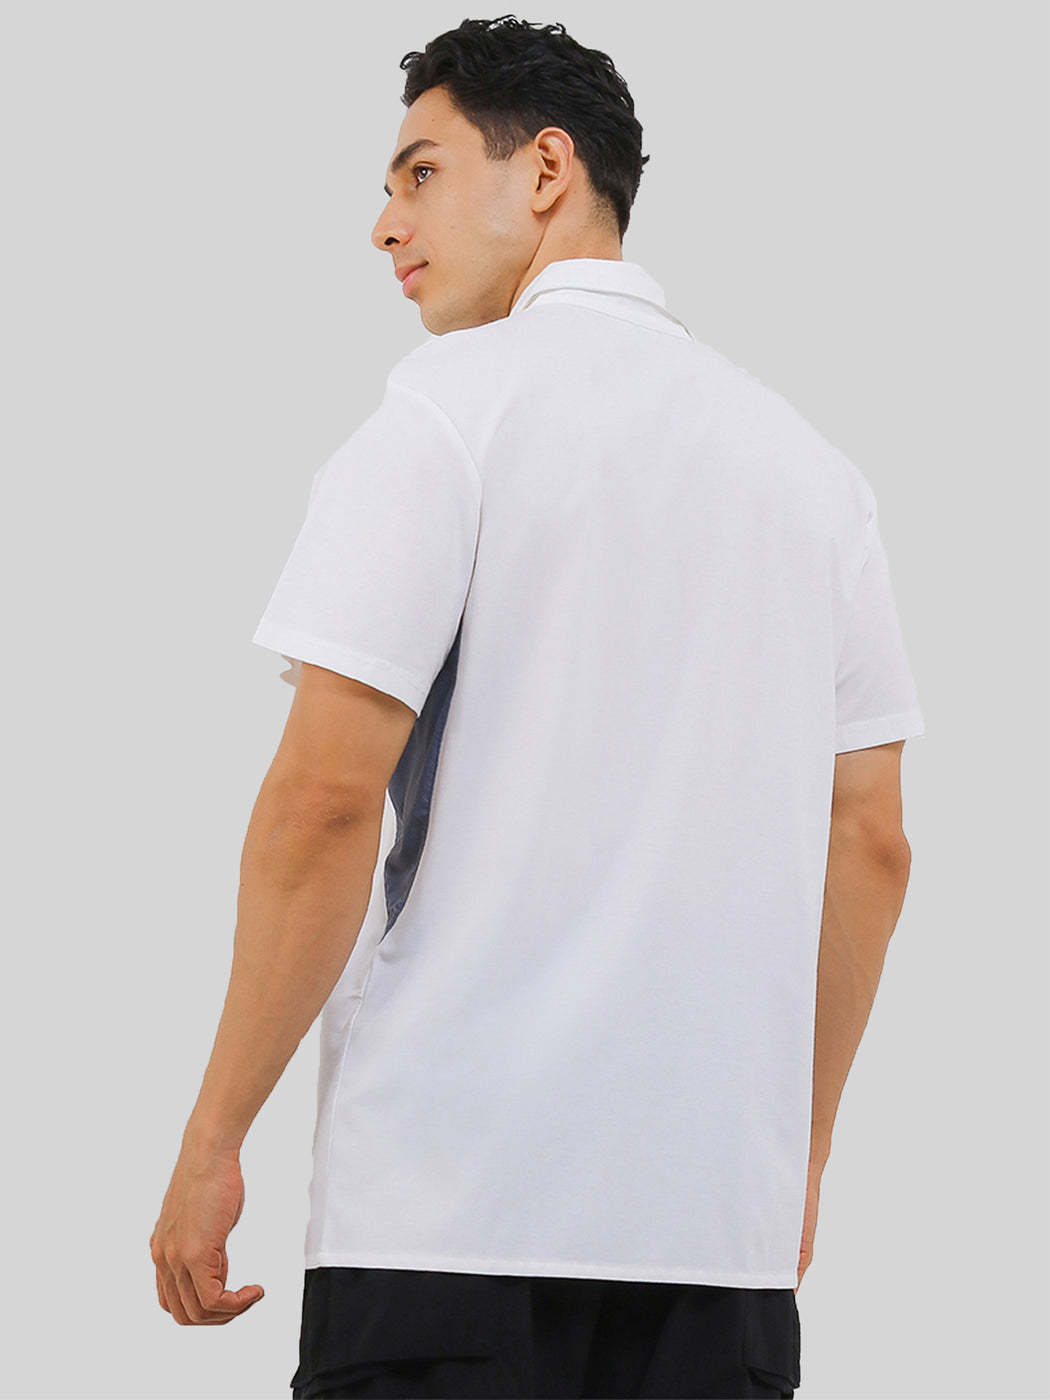 Unisex Ultimate Utilitarian Shirt Male White